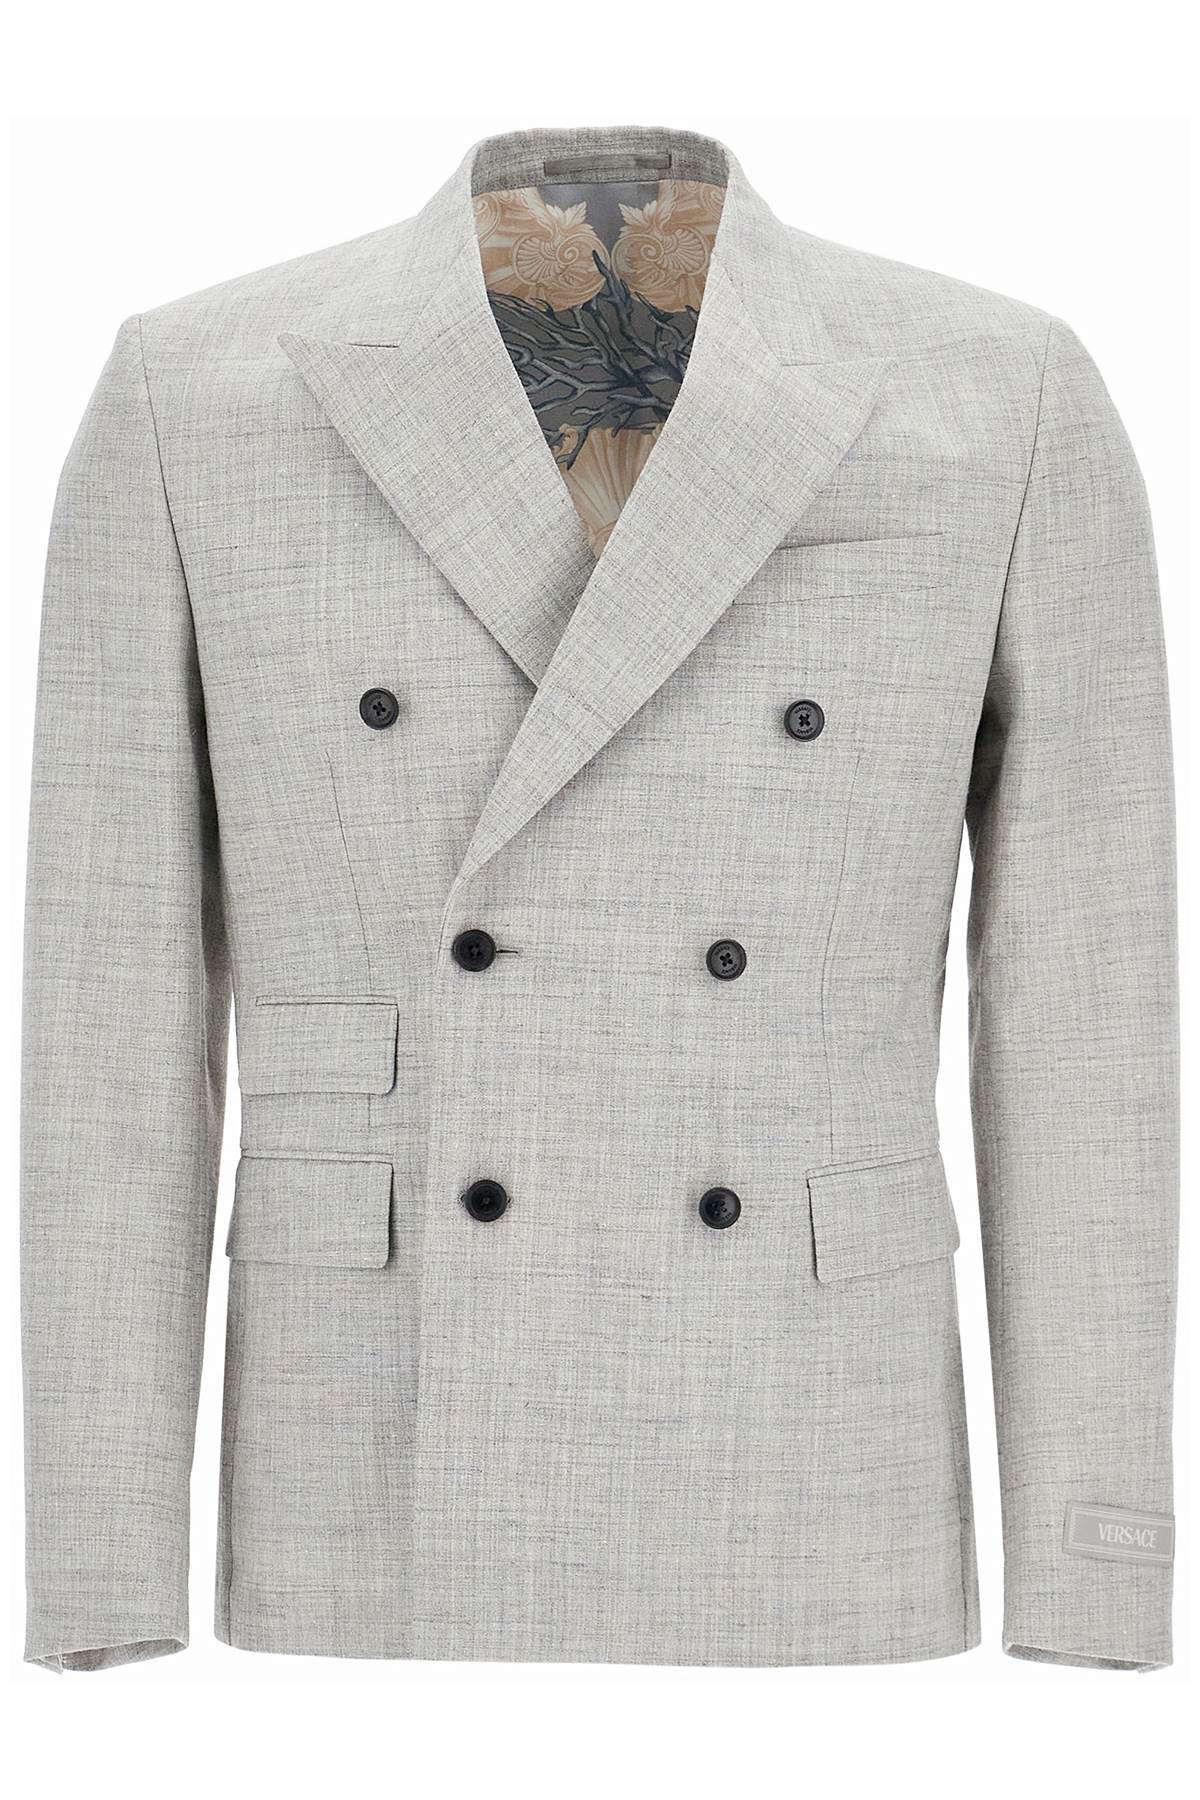 Versace VERSACE double-breasted wool blend blazer